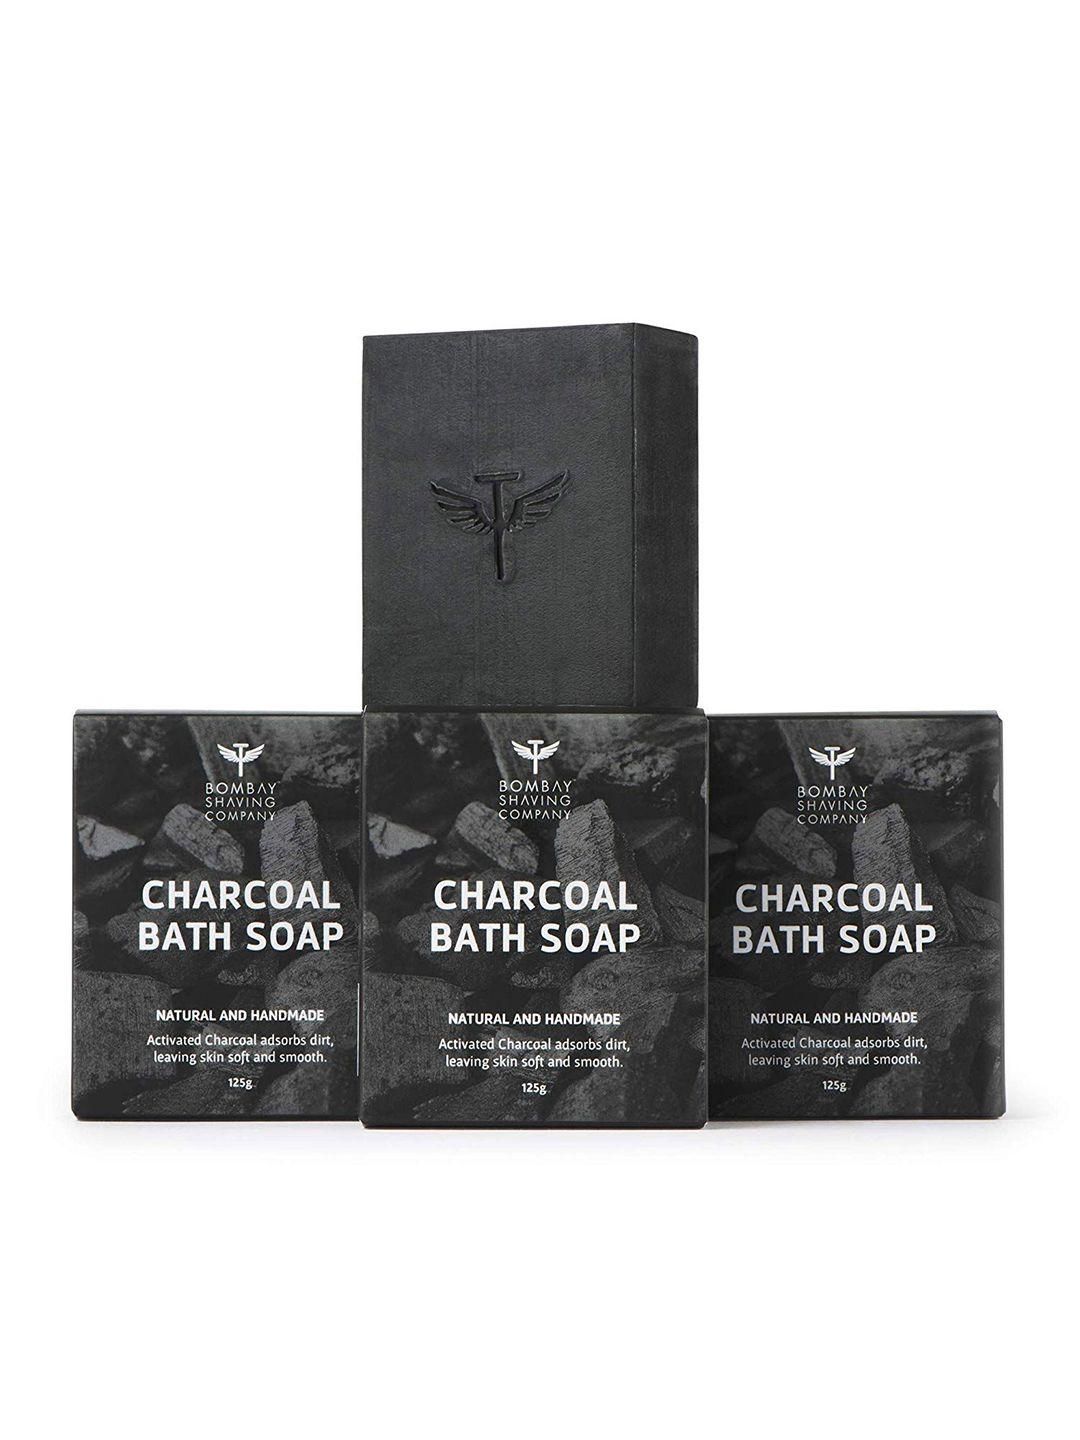 bombay shaving company charcoal deep cleansing handmade exfoliating bath soap set of 3 375g